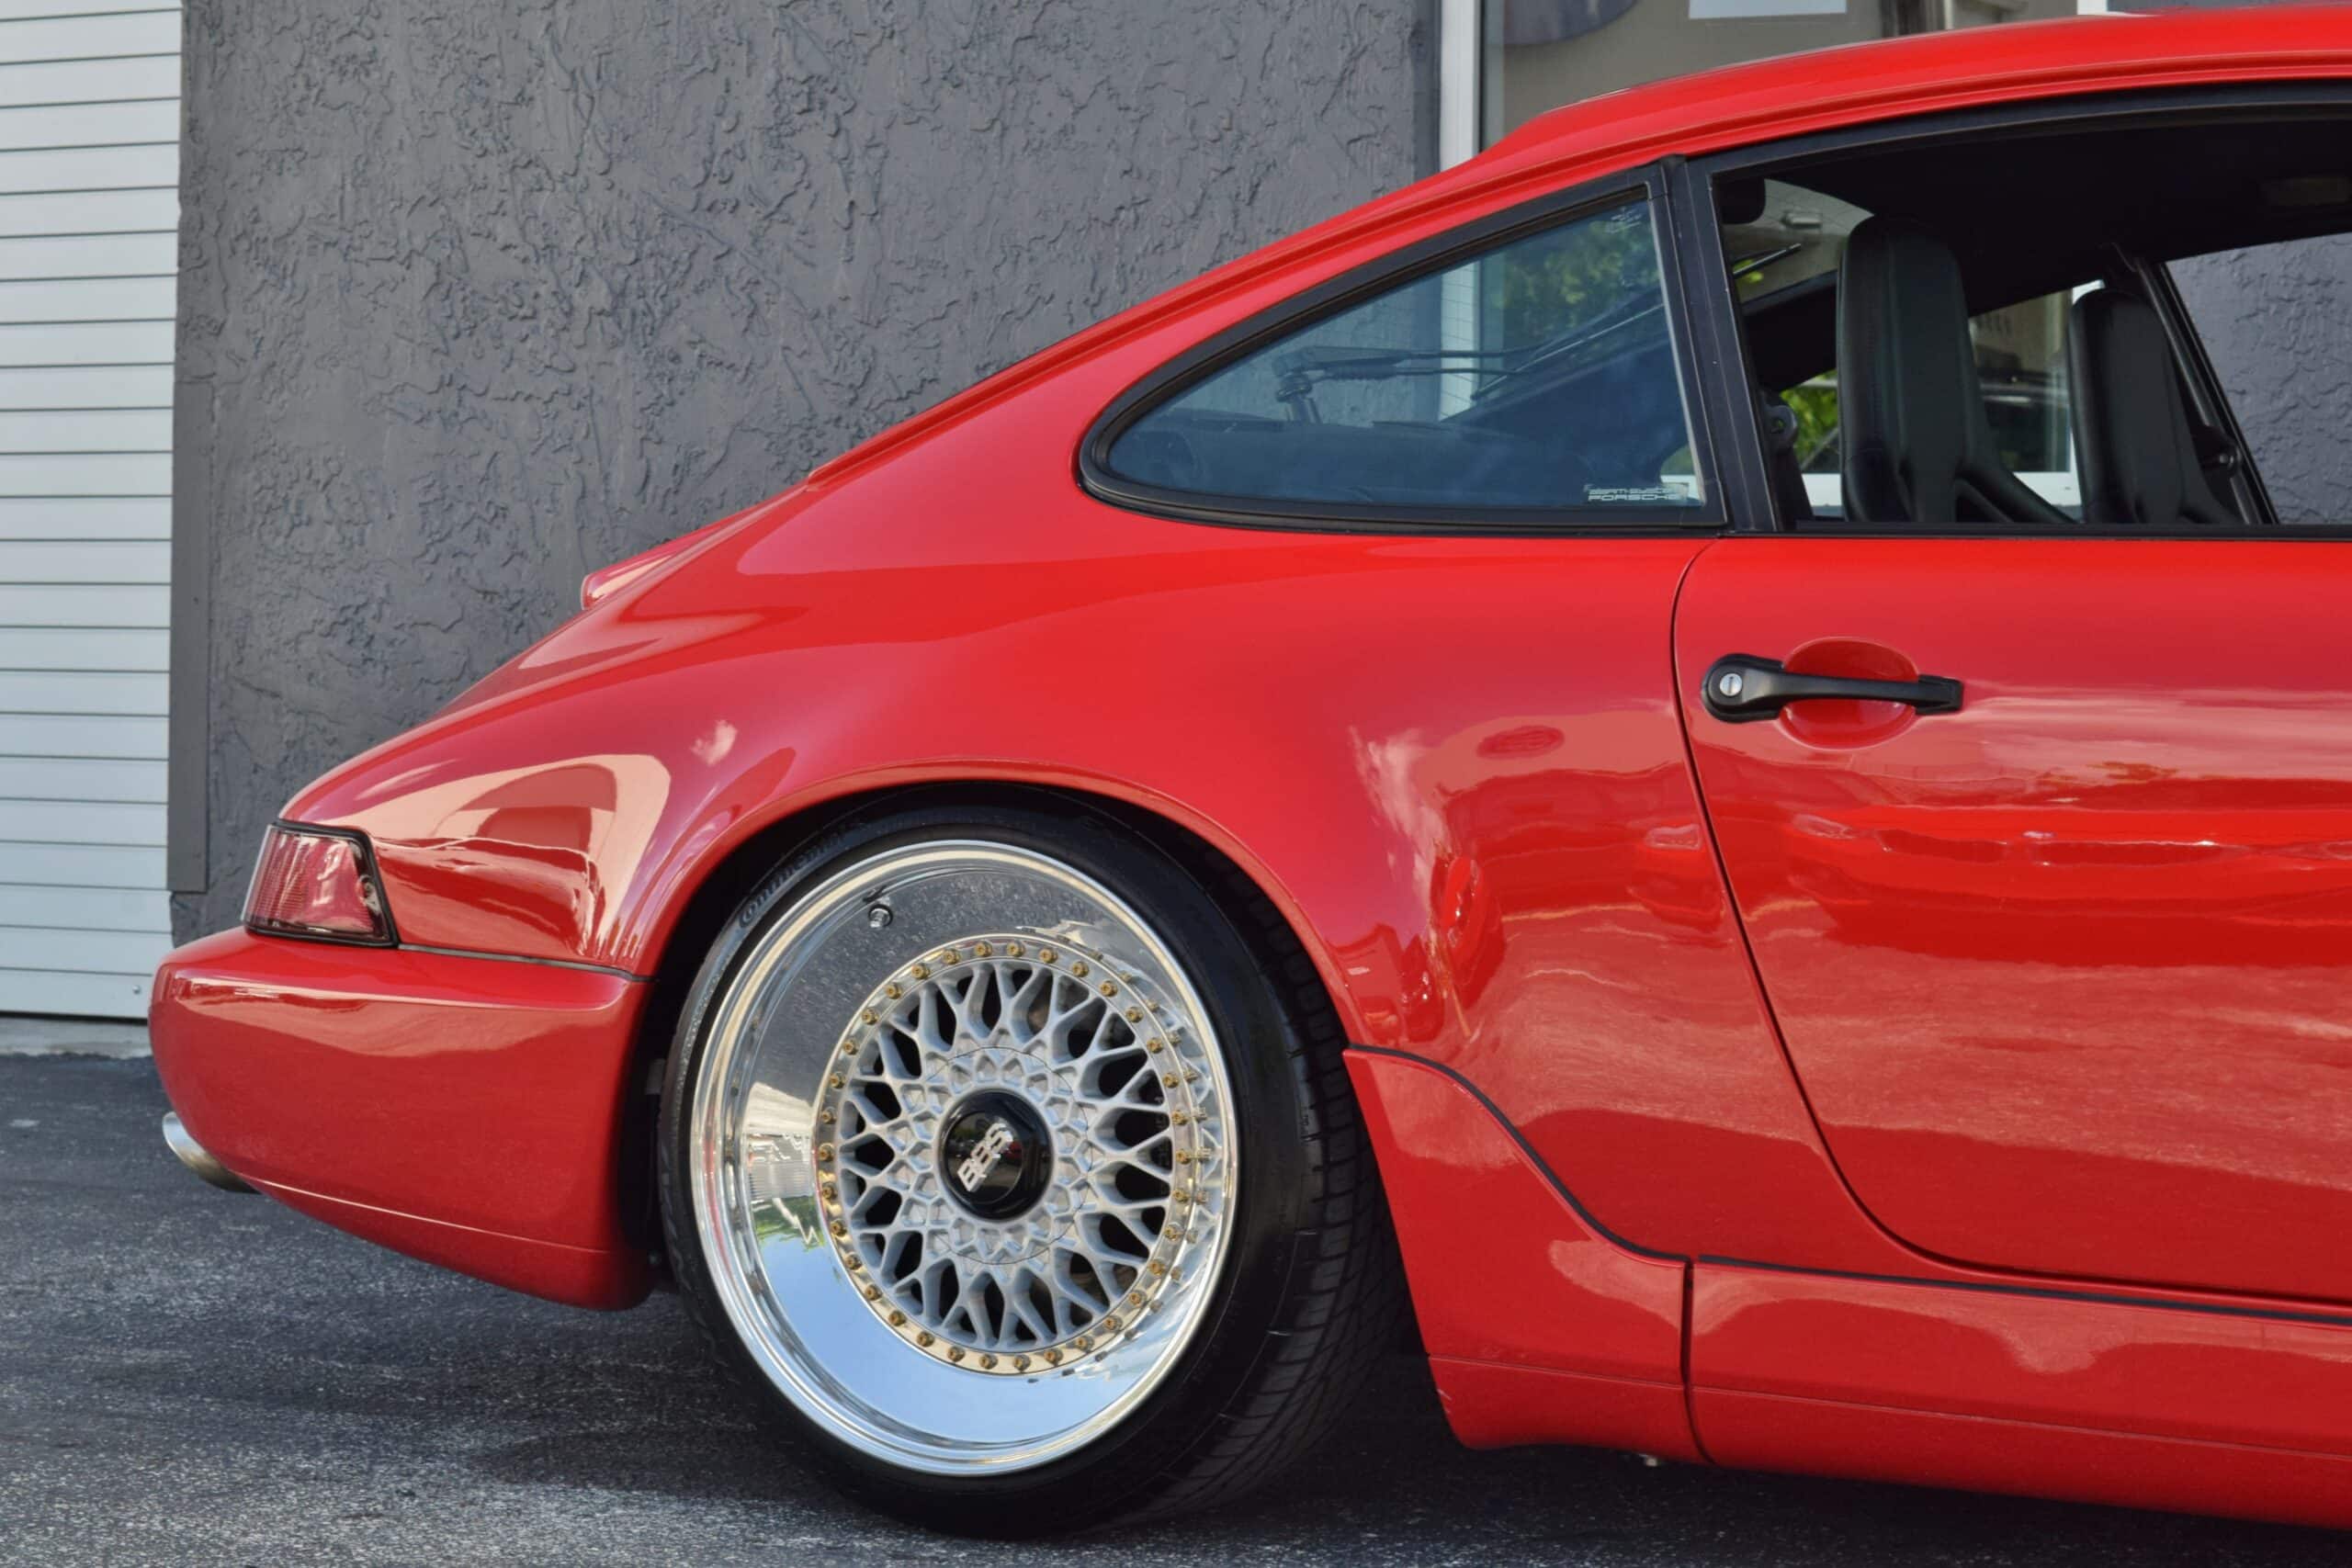 1989 Porsche 911 Carrera 4 964 SHOW CAR-BBS RS- Recaro Seats-H&R Coilovers $53,000 Reciepts – Engine Refresh